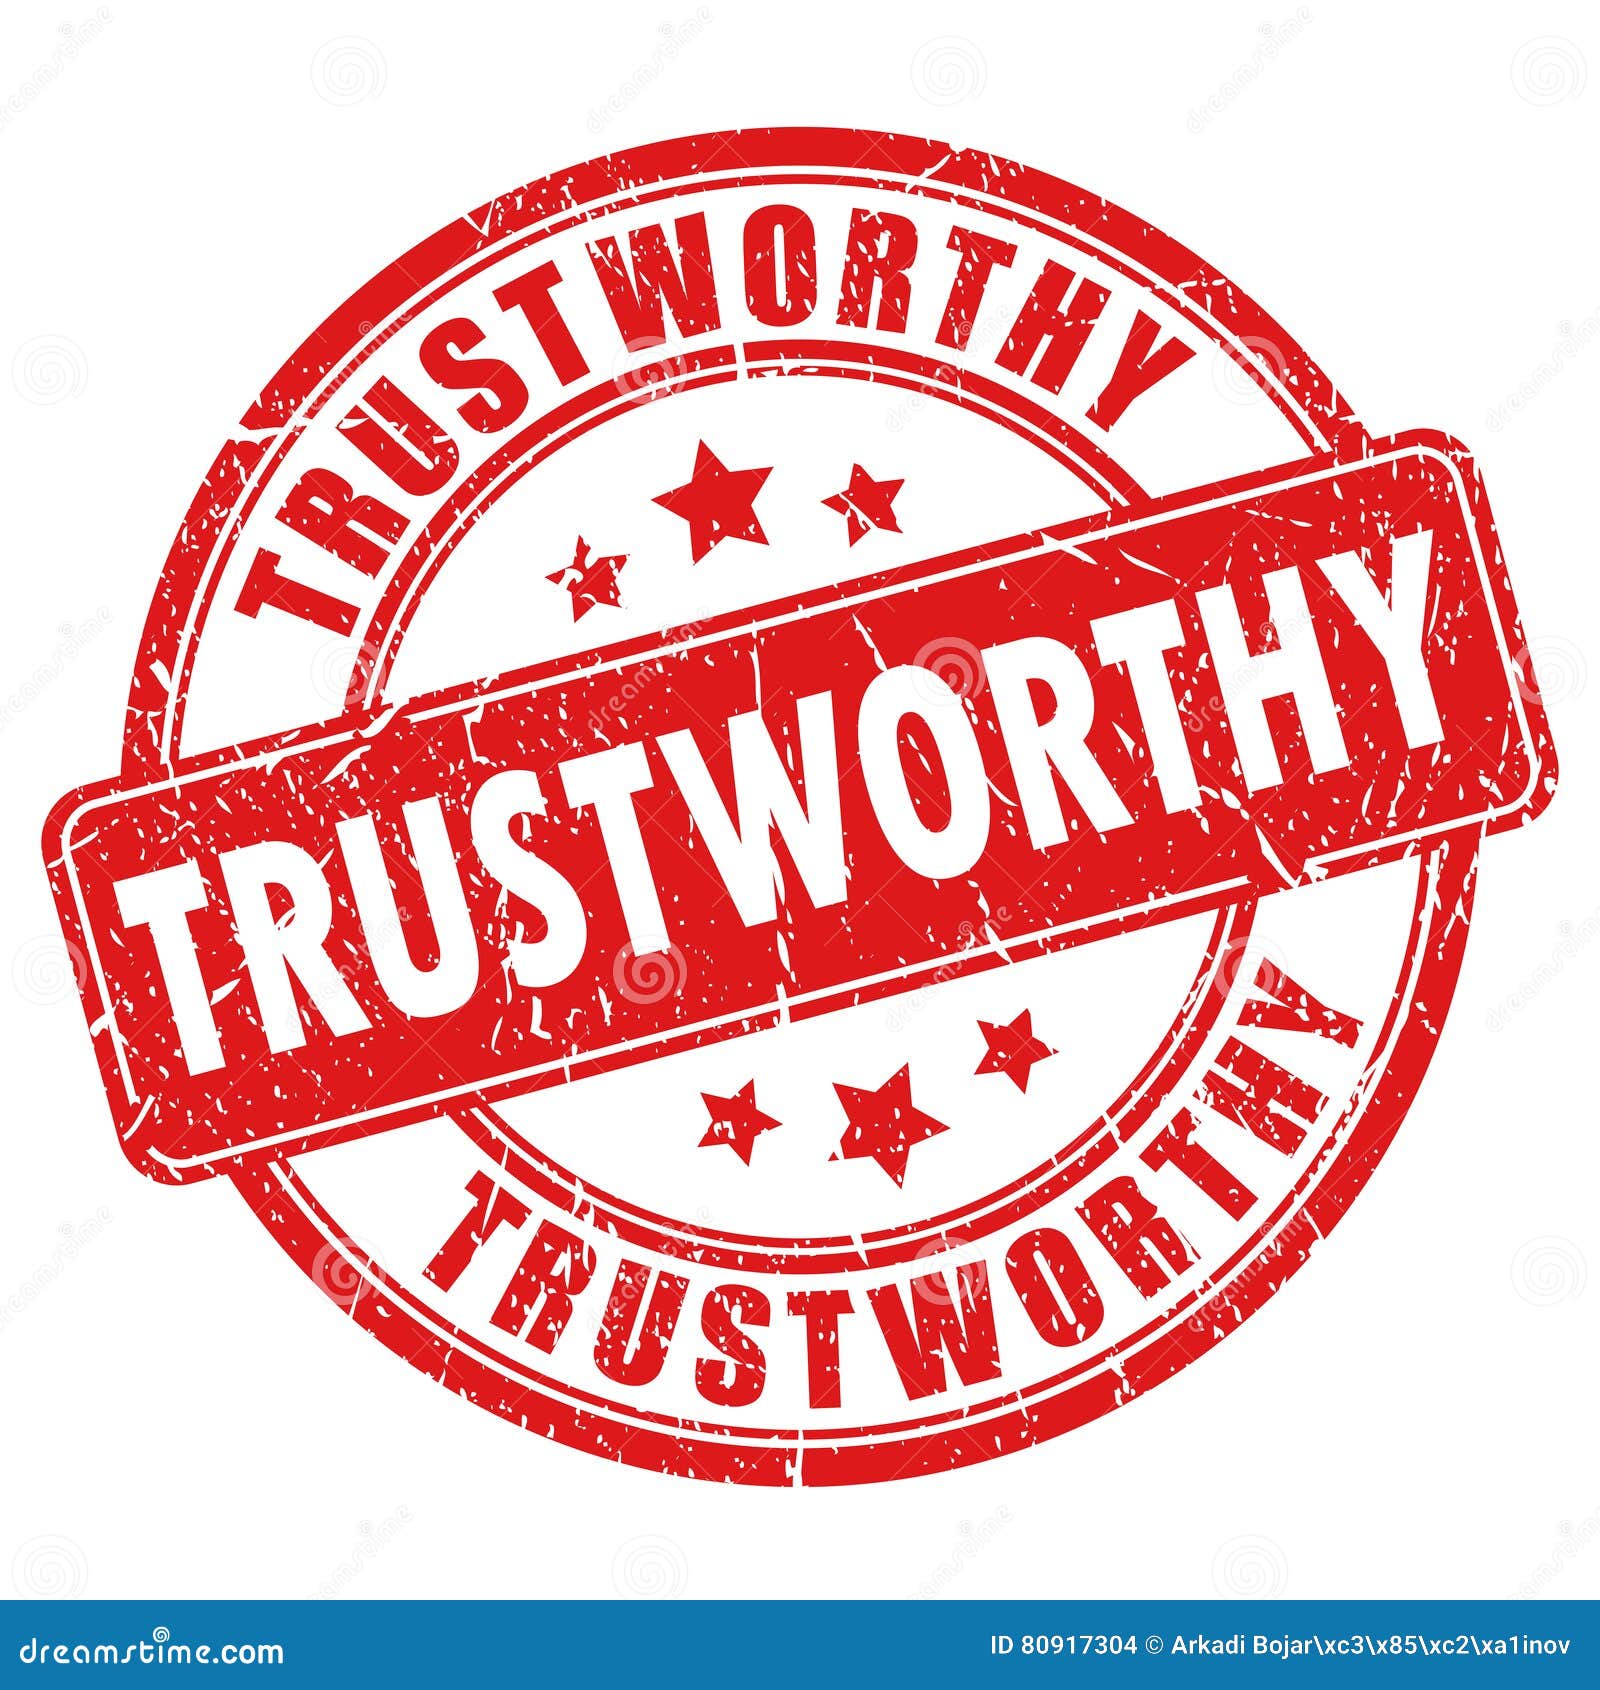 trustworthy rubber stamp